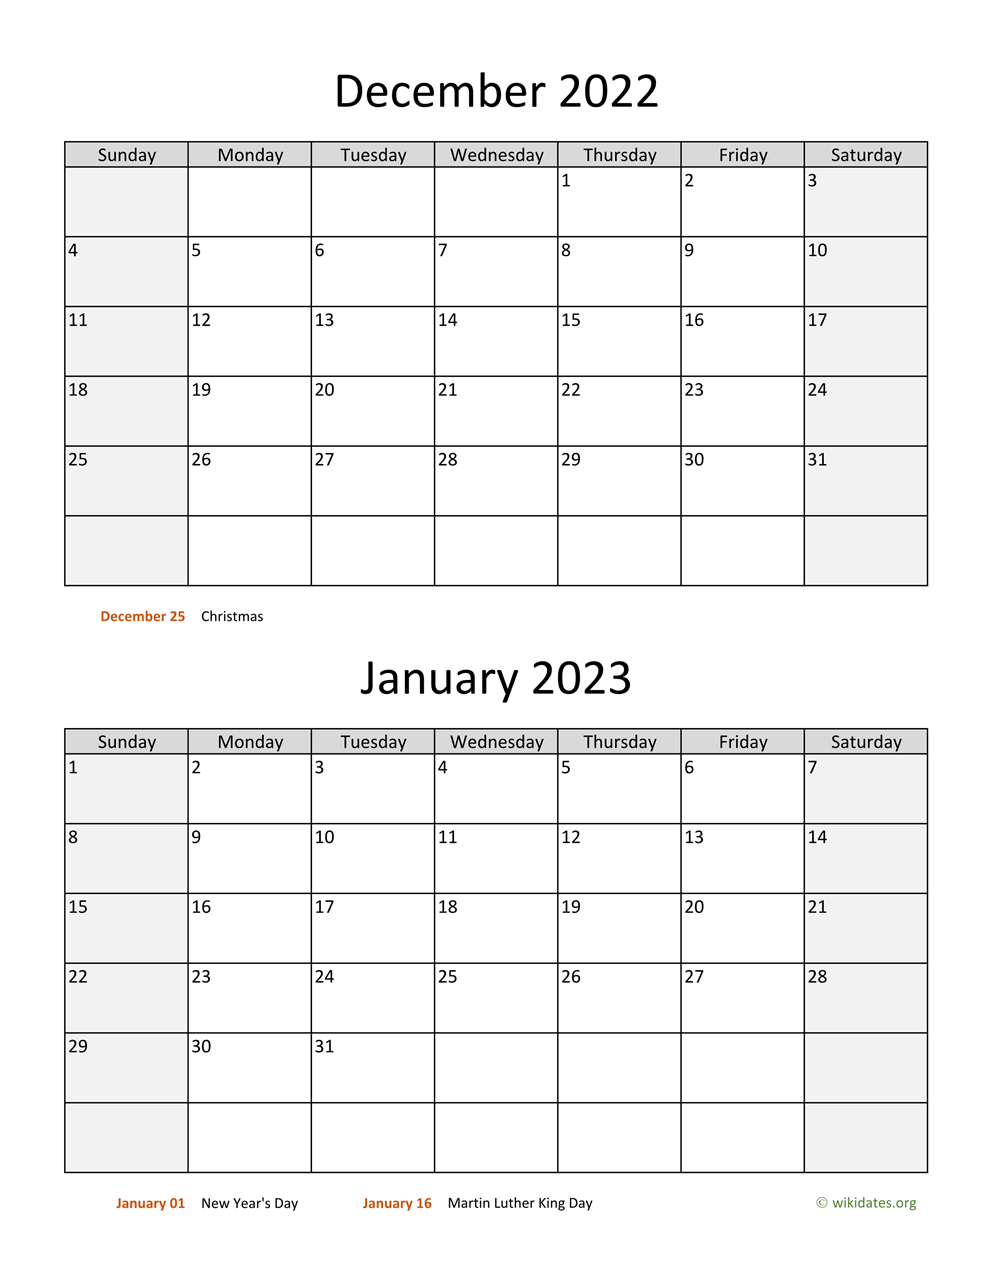 December 2022 And January 2023 Calendar Template Calendar Design Riset